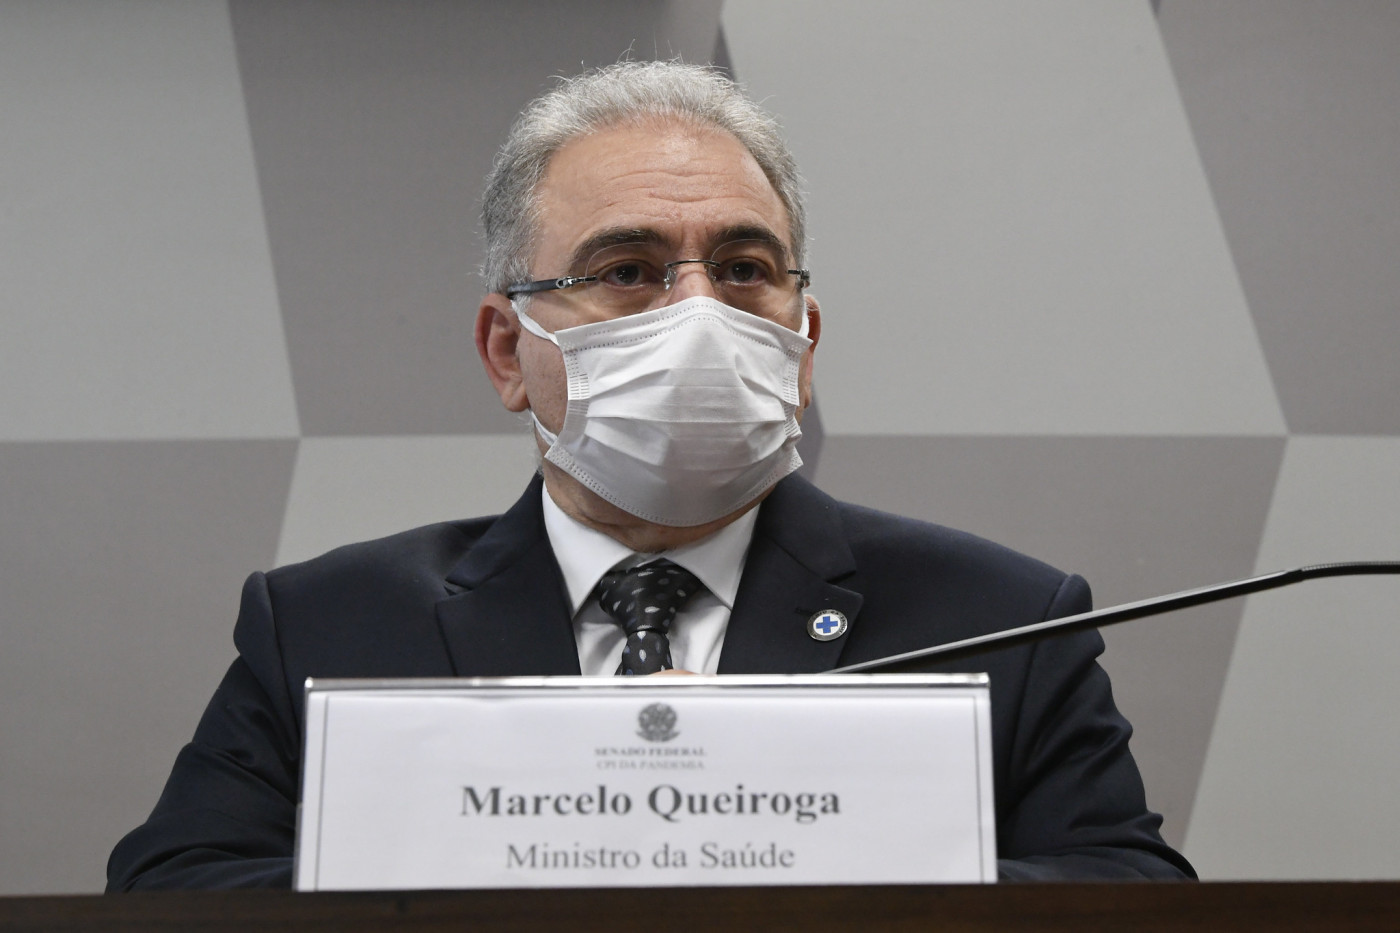 O ministro da Saúde, Marcelo Queiroga, durante pronunciamento na CPI da Covid-19